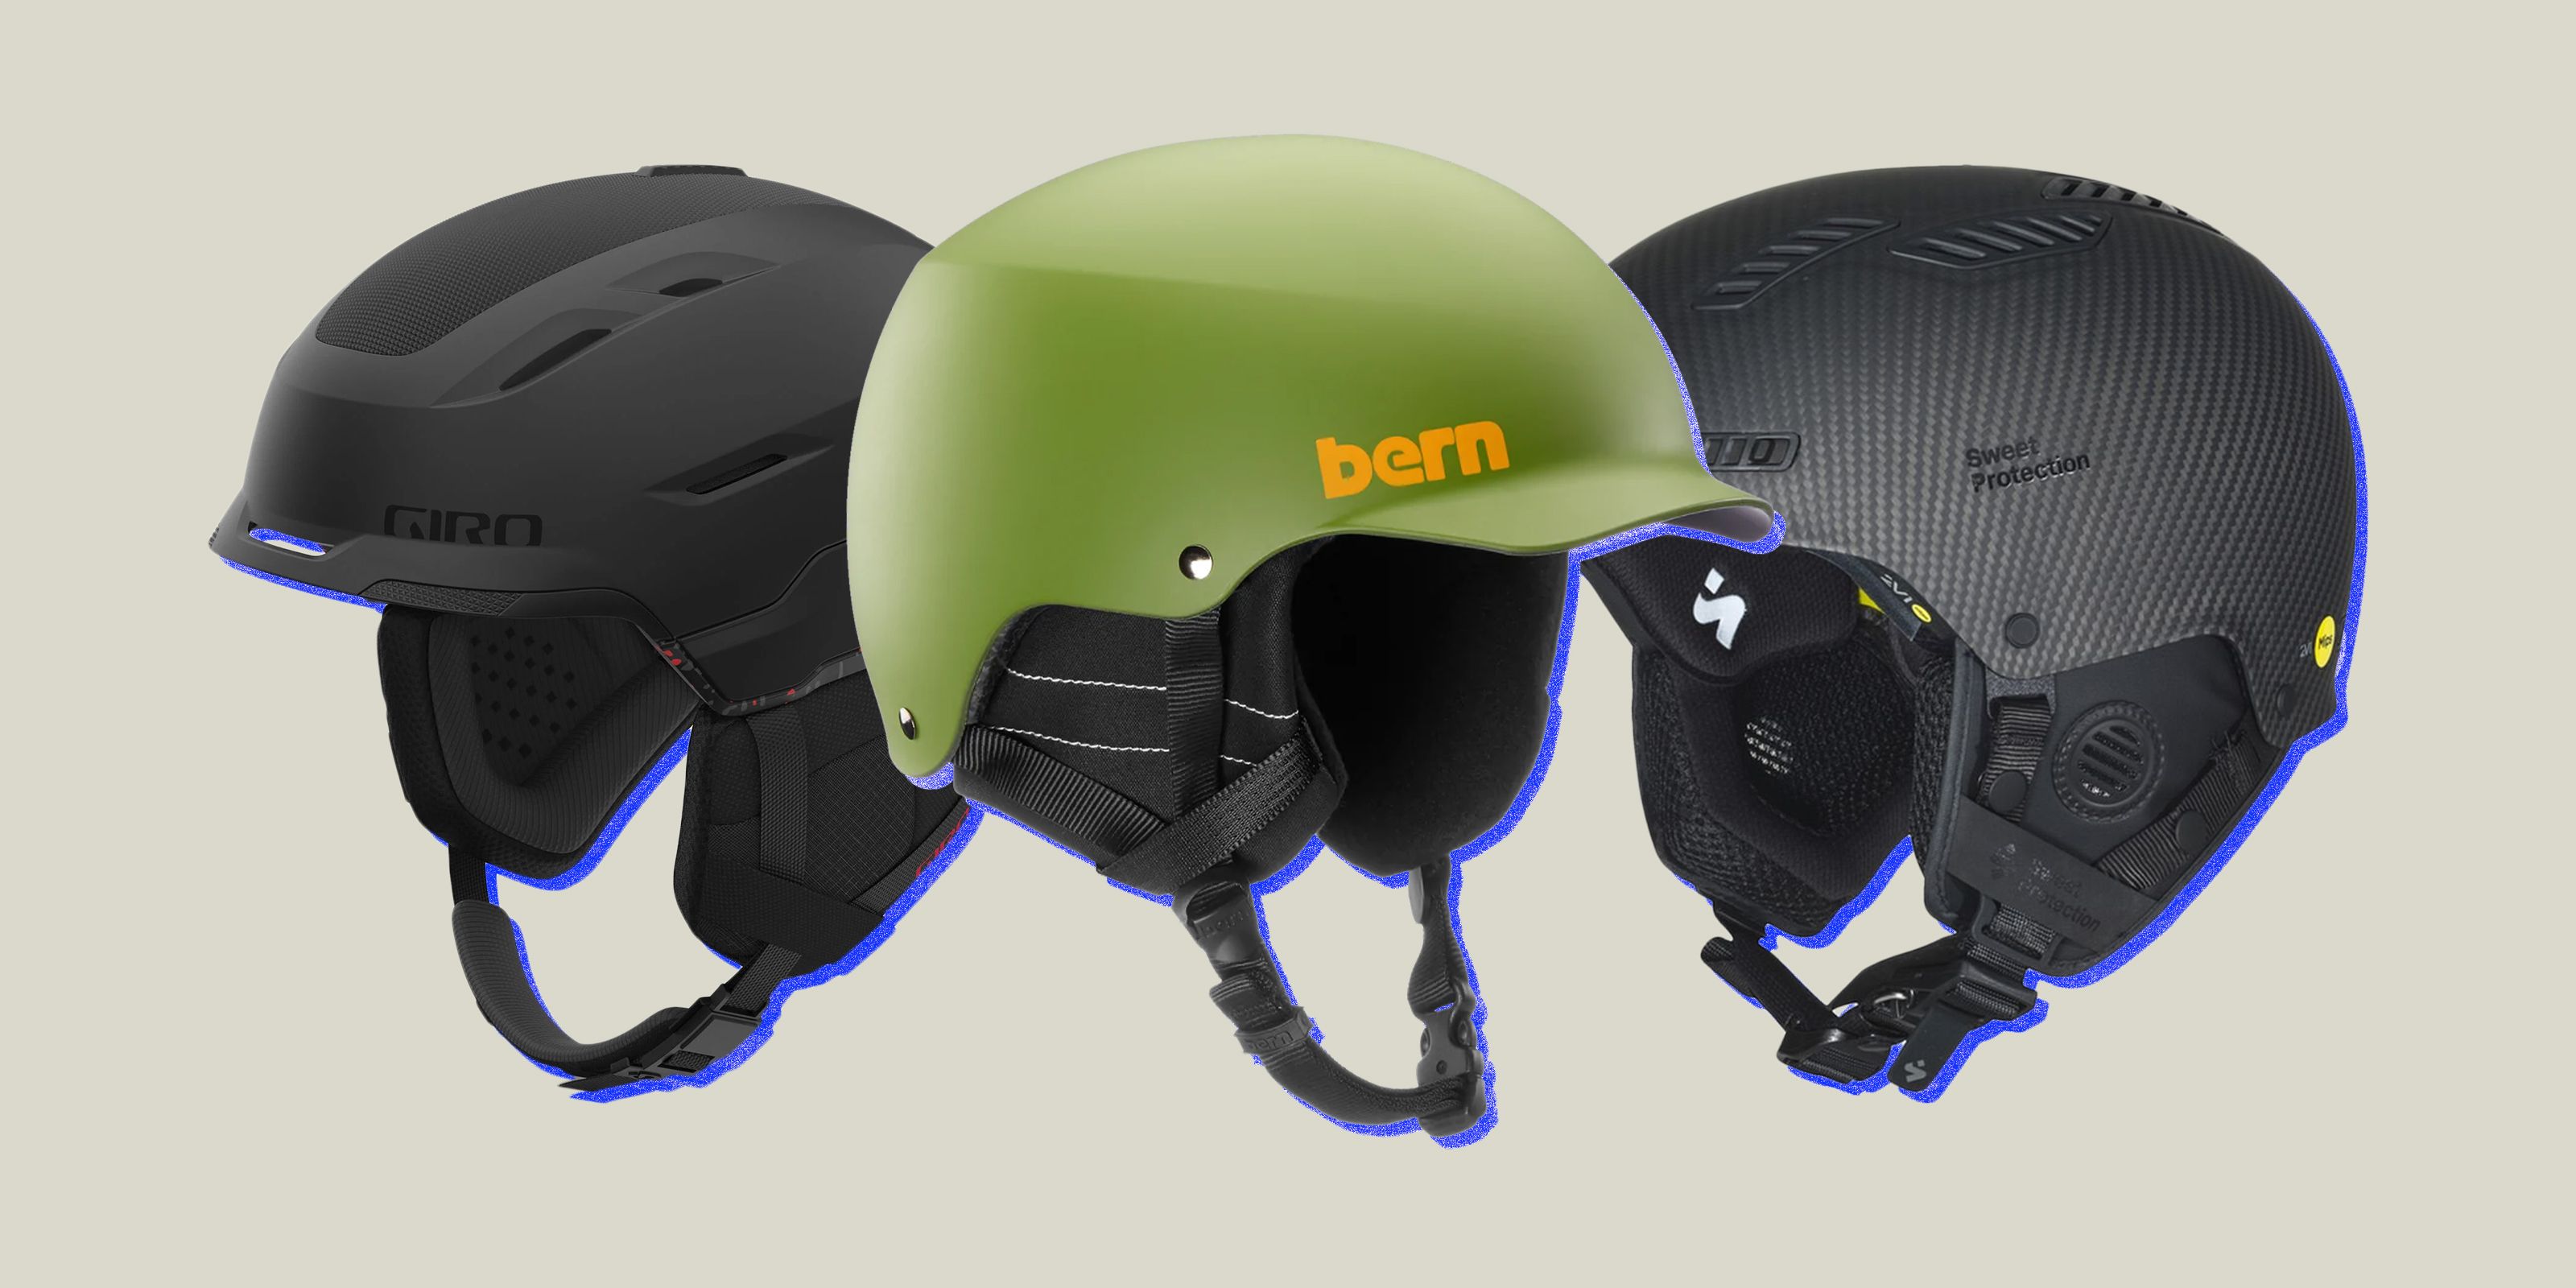 The Best Ski Helmets